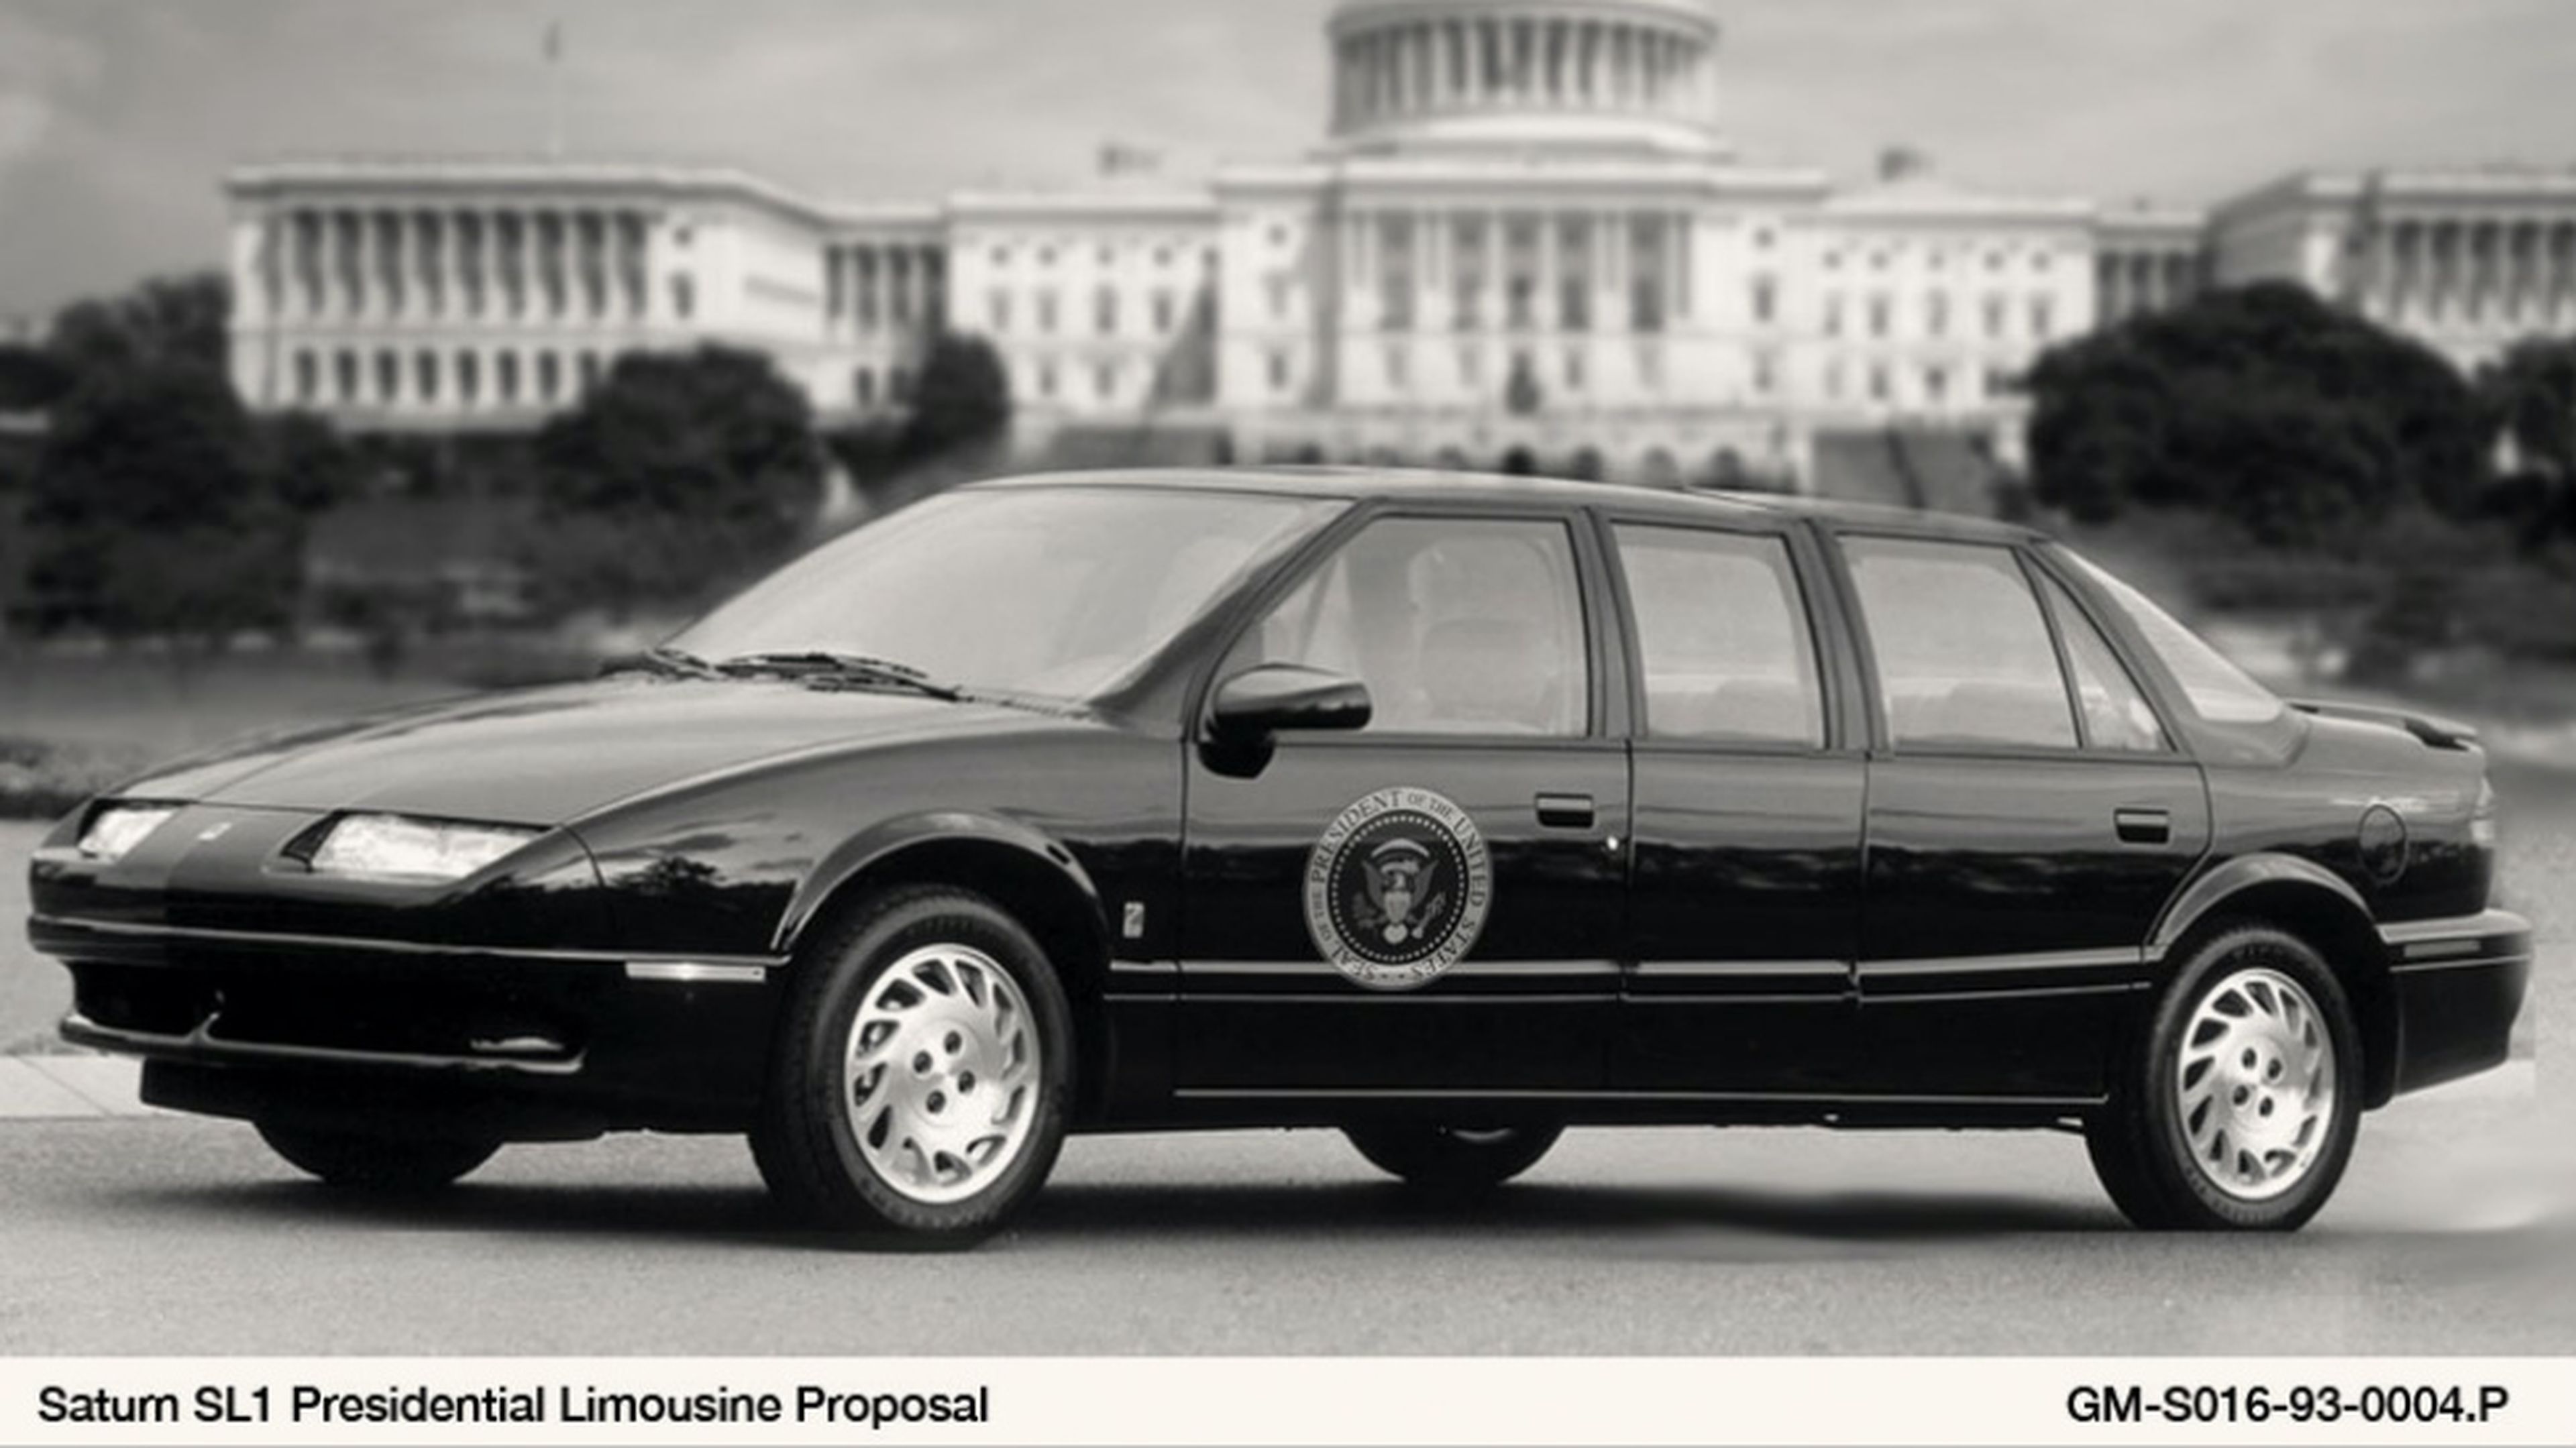 4. 1993 Saturn SL1 State Car para el presidente Bill Clinton